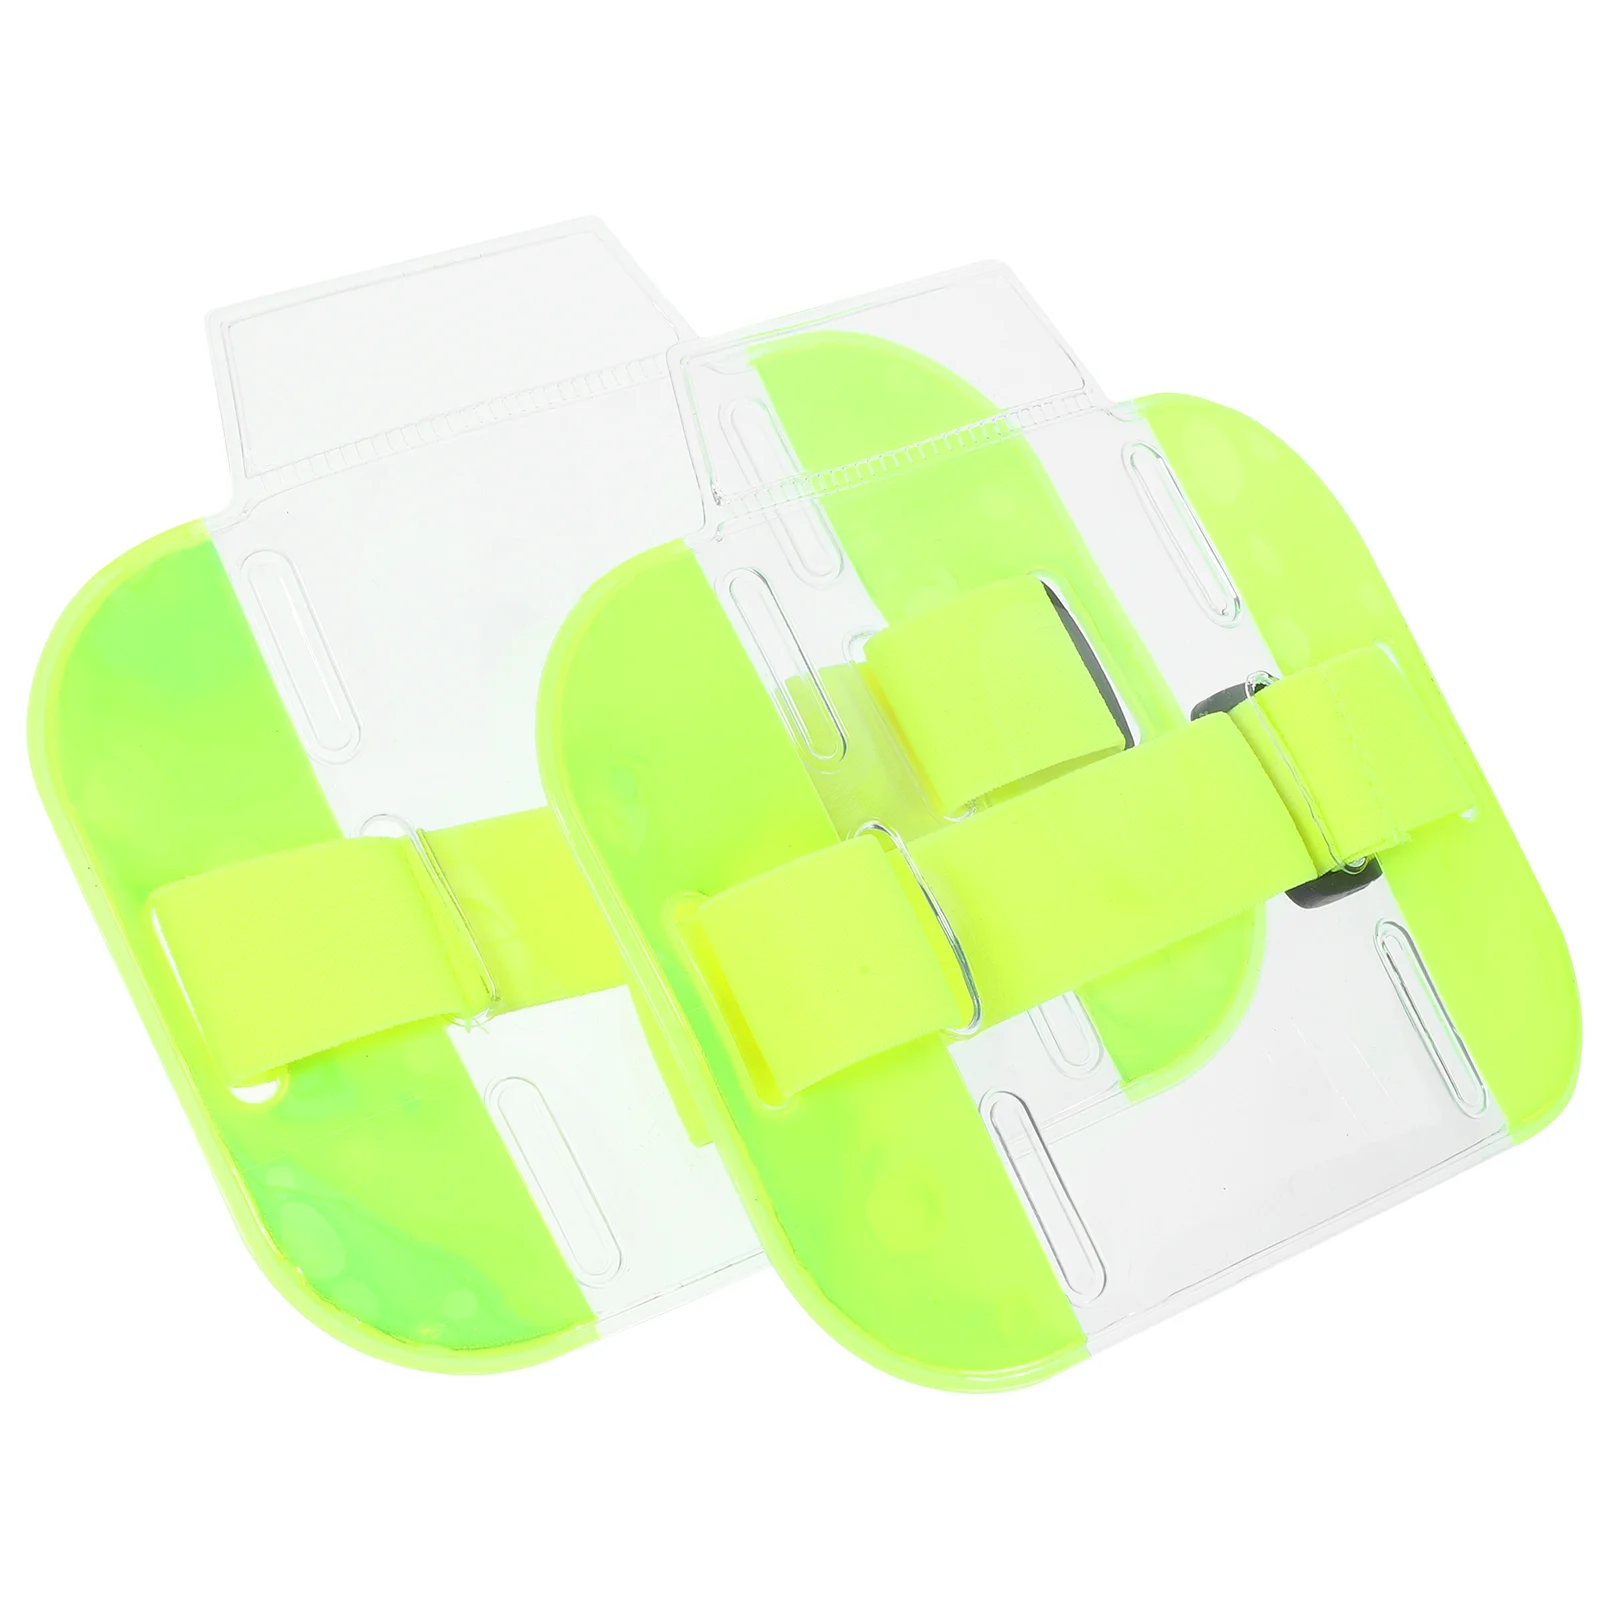 

2 Pcs Plastic Card Sleeves Armband Clip Work Permit 14.5x13.8x0.2cm Light Green